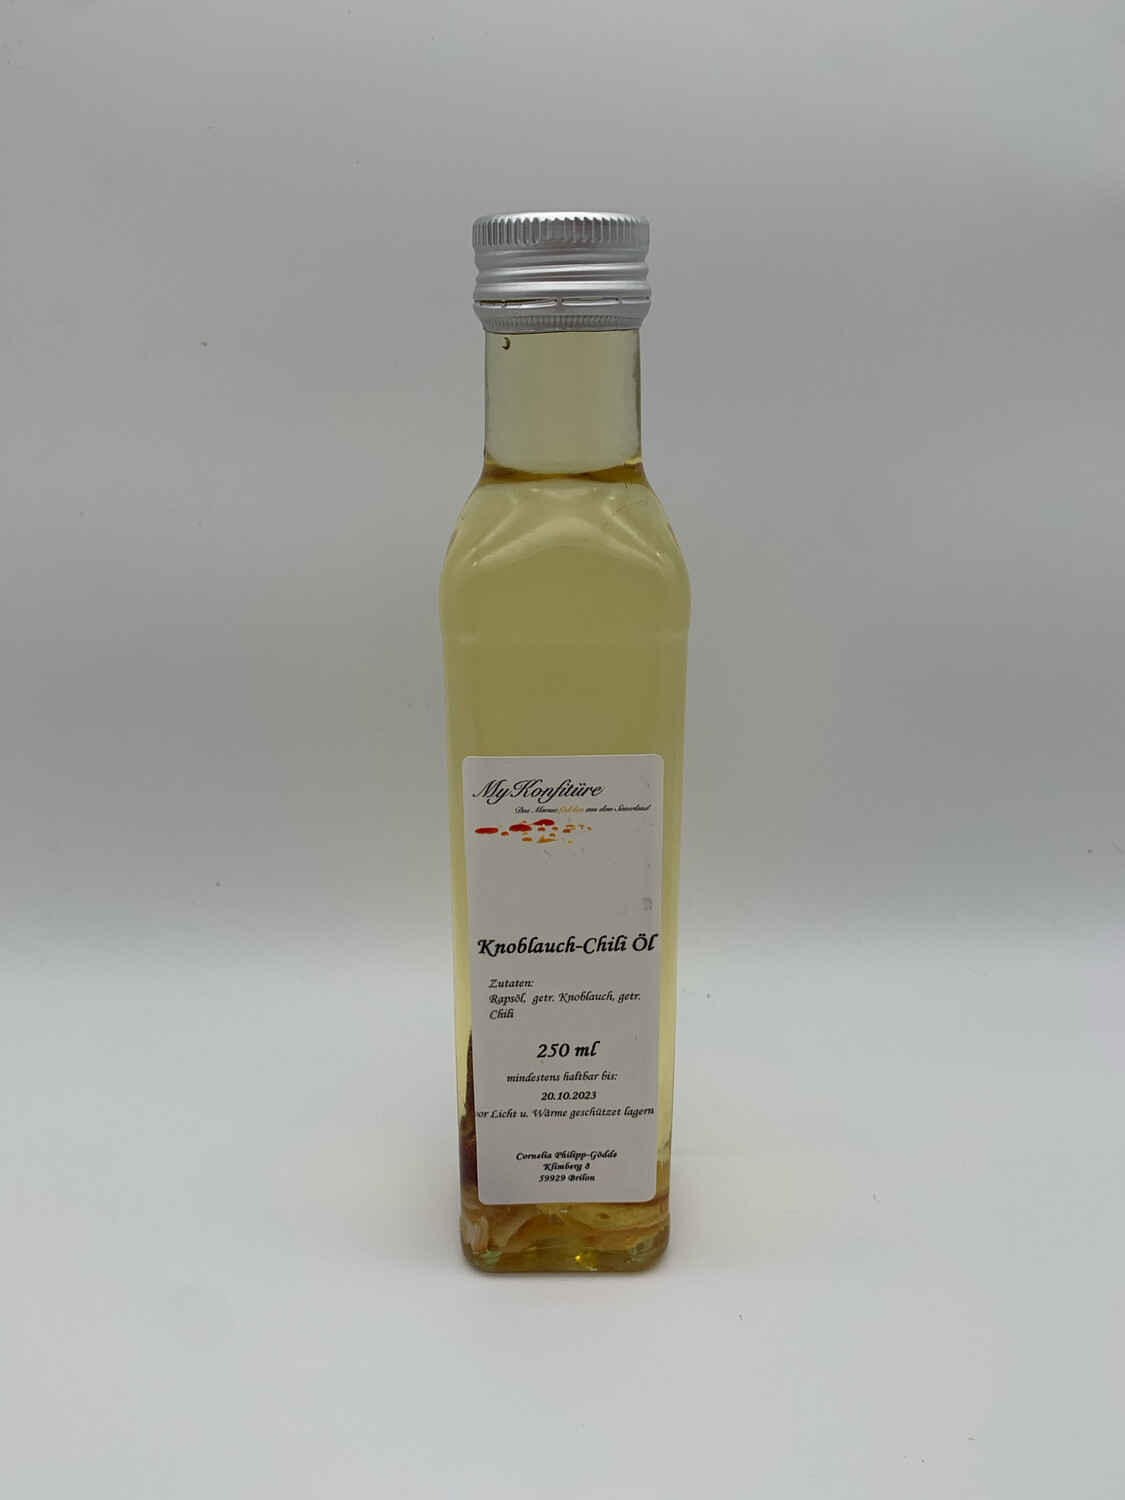 Knoblauch-Chili Öl 250ml